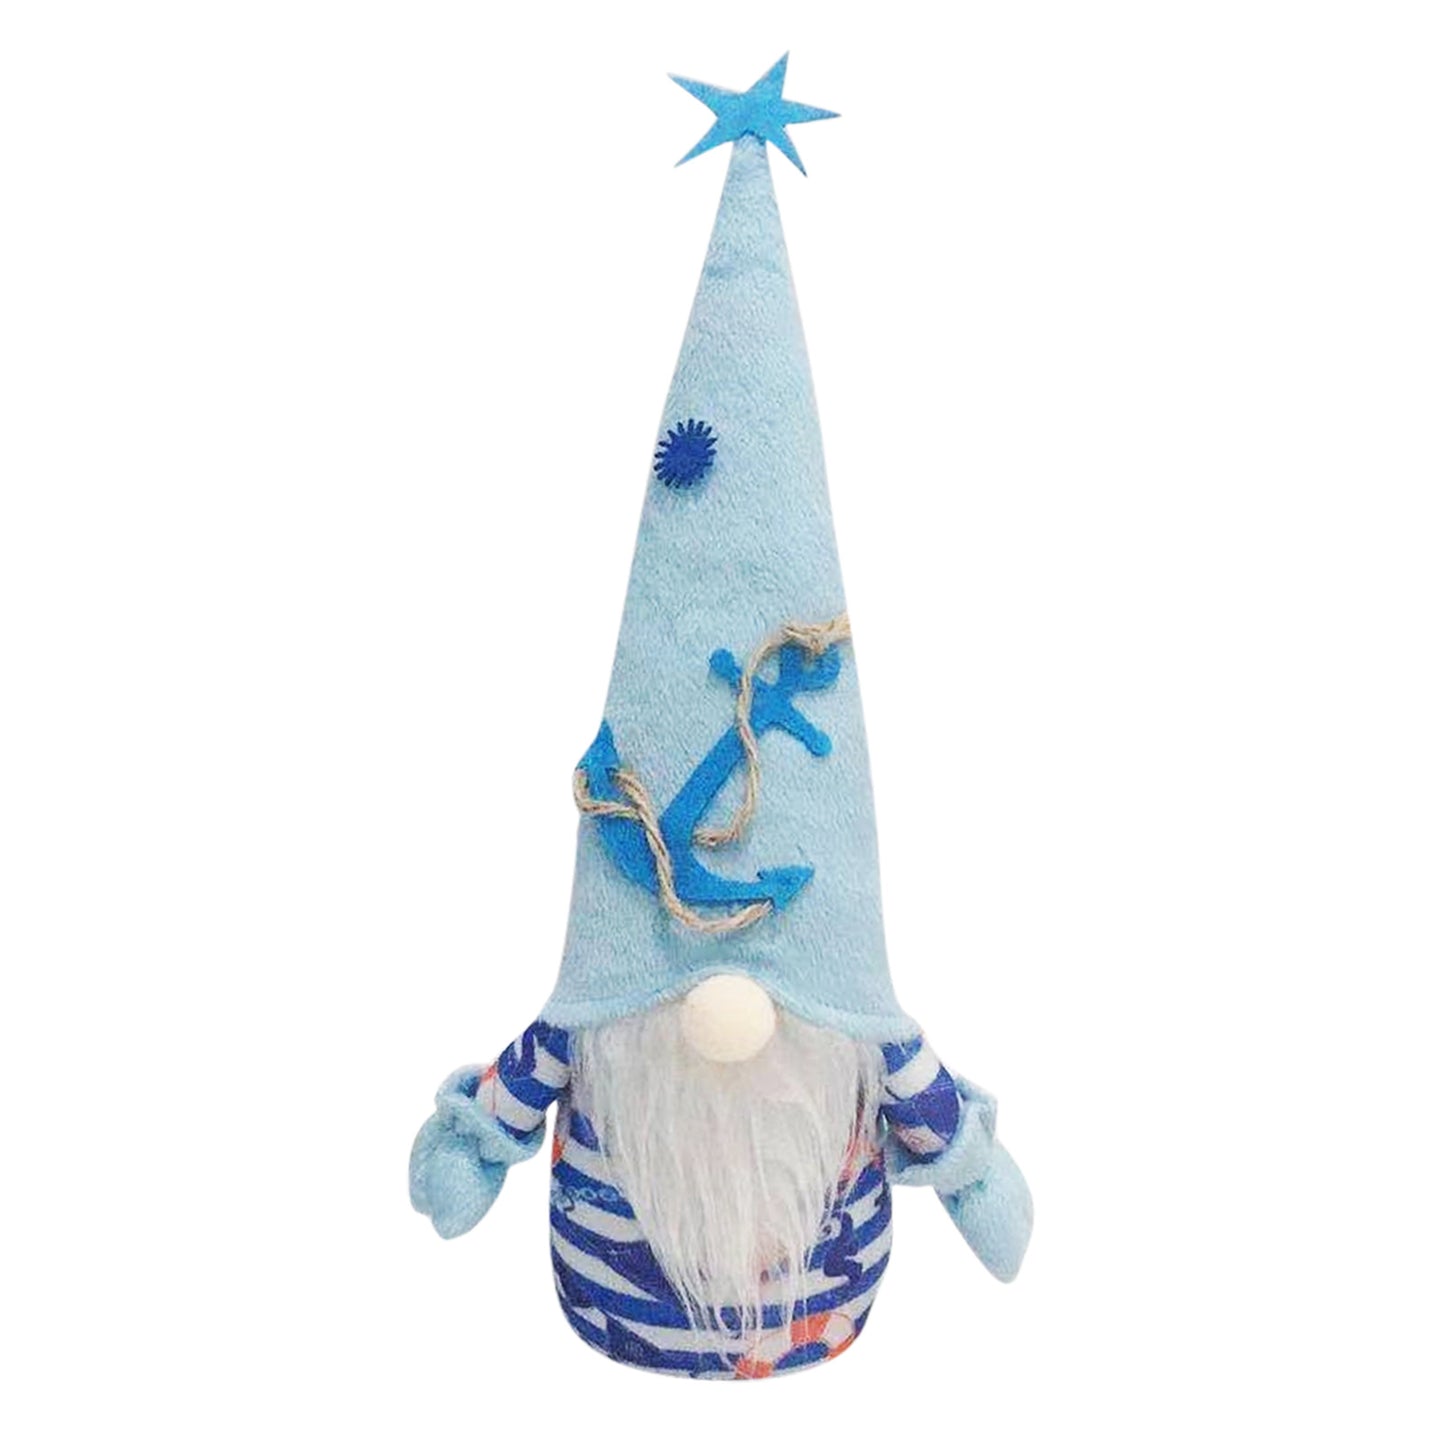 Summer Ocean Gnome